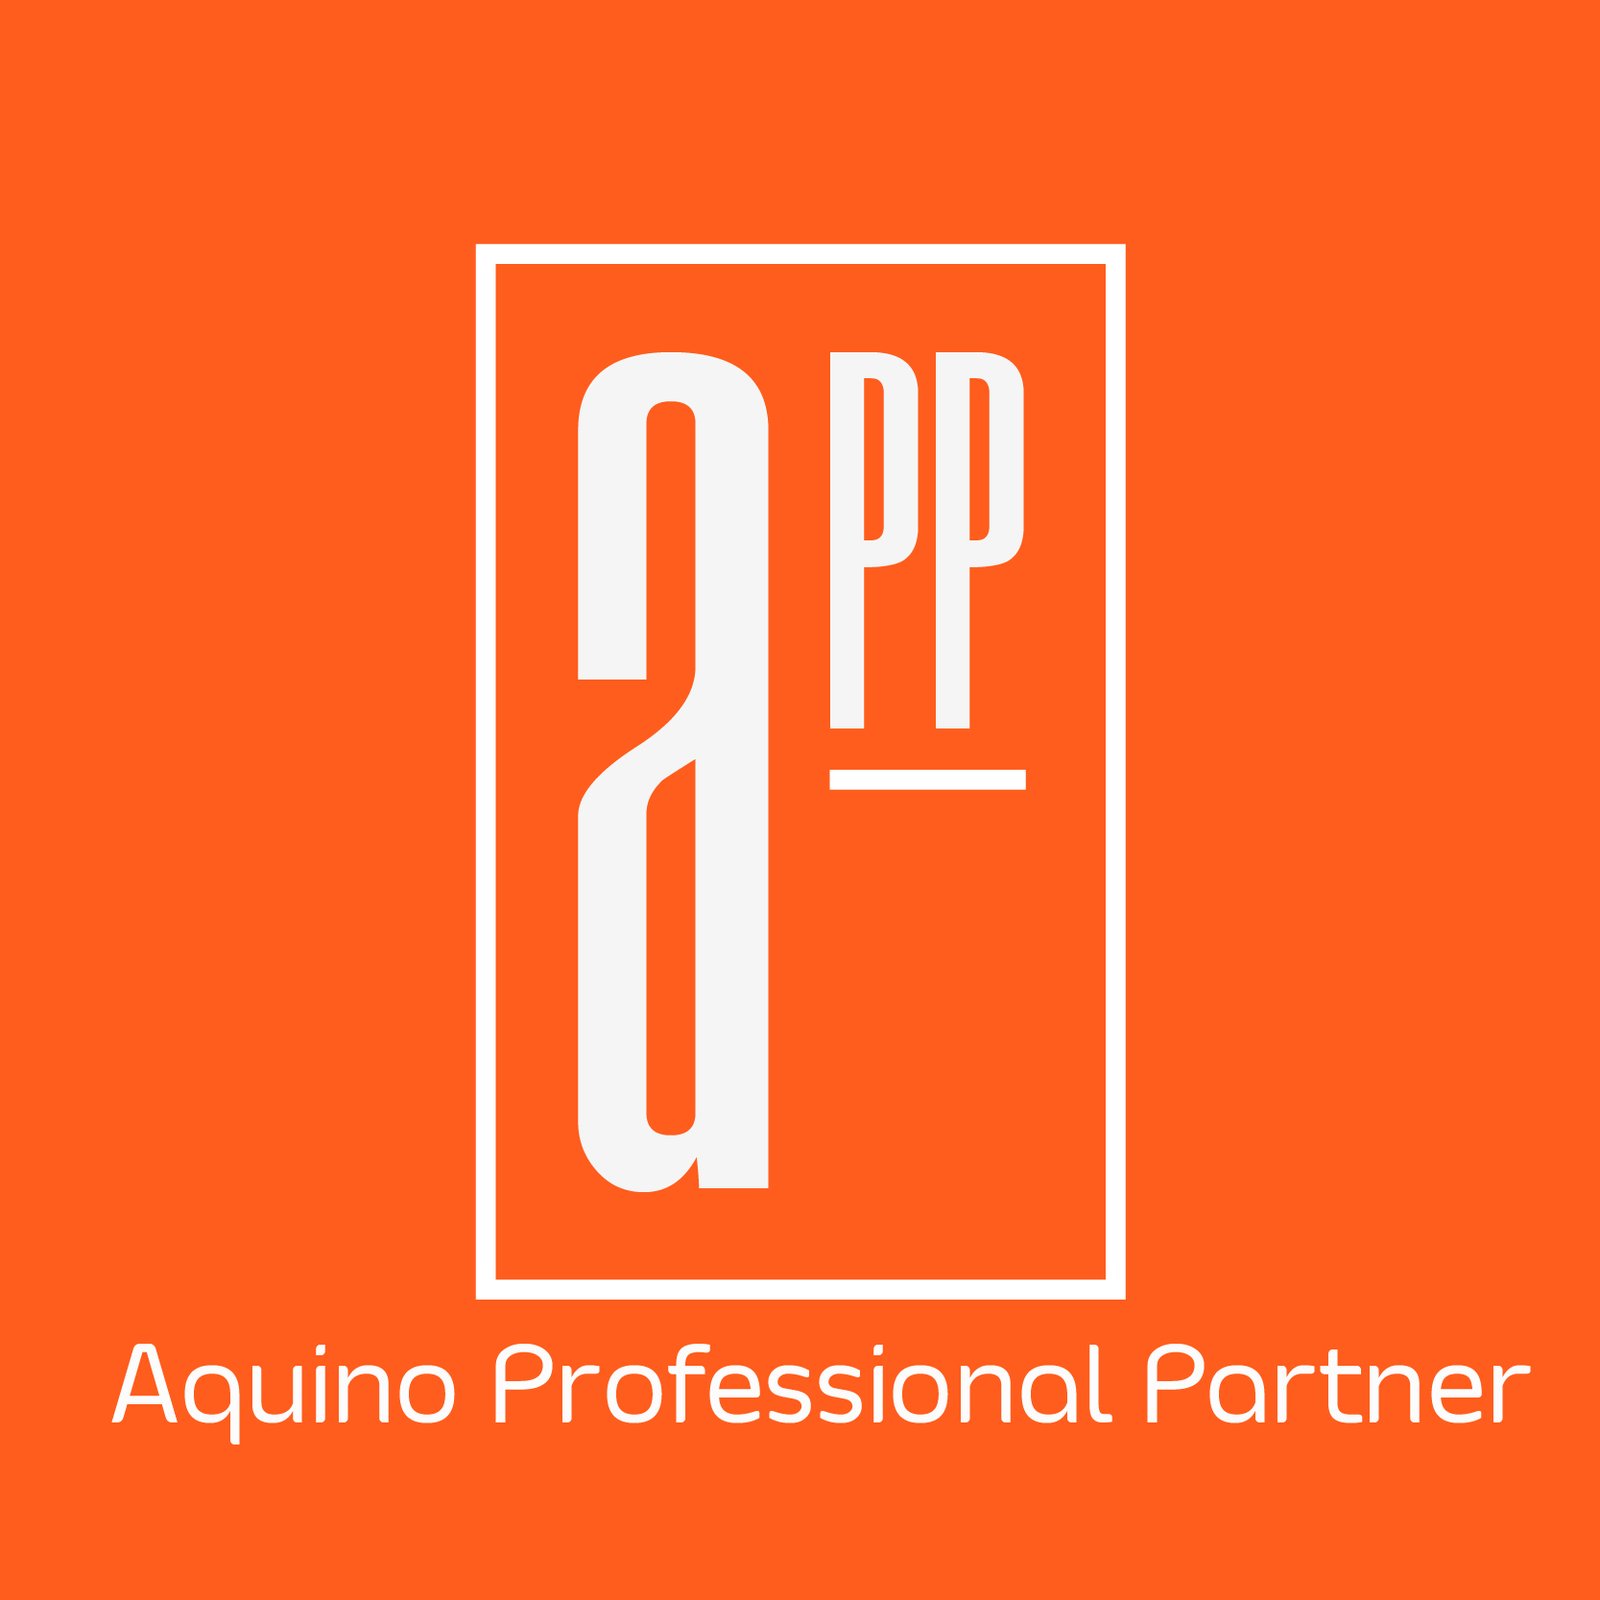 App Professional Partner logo naranja